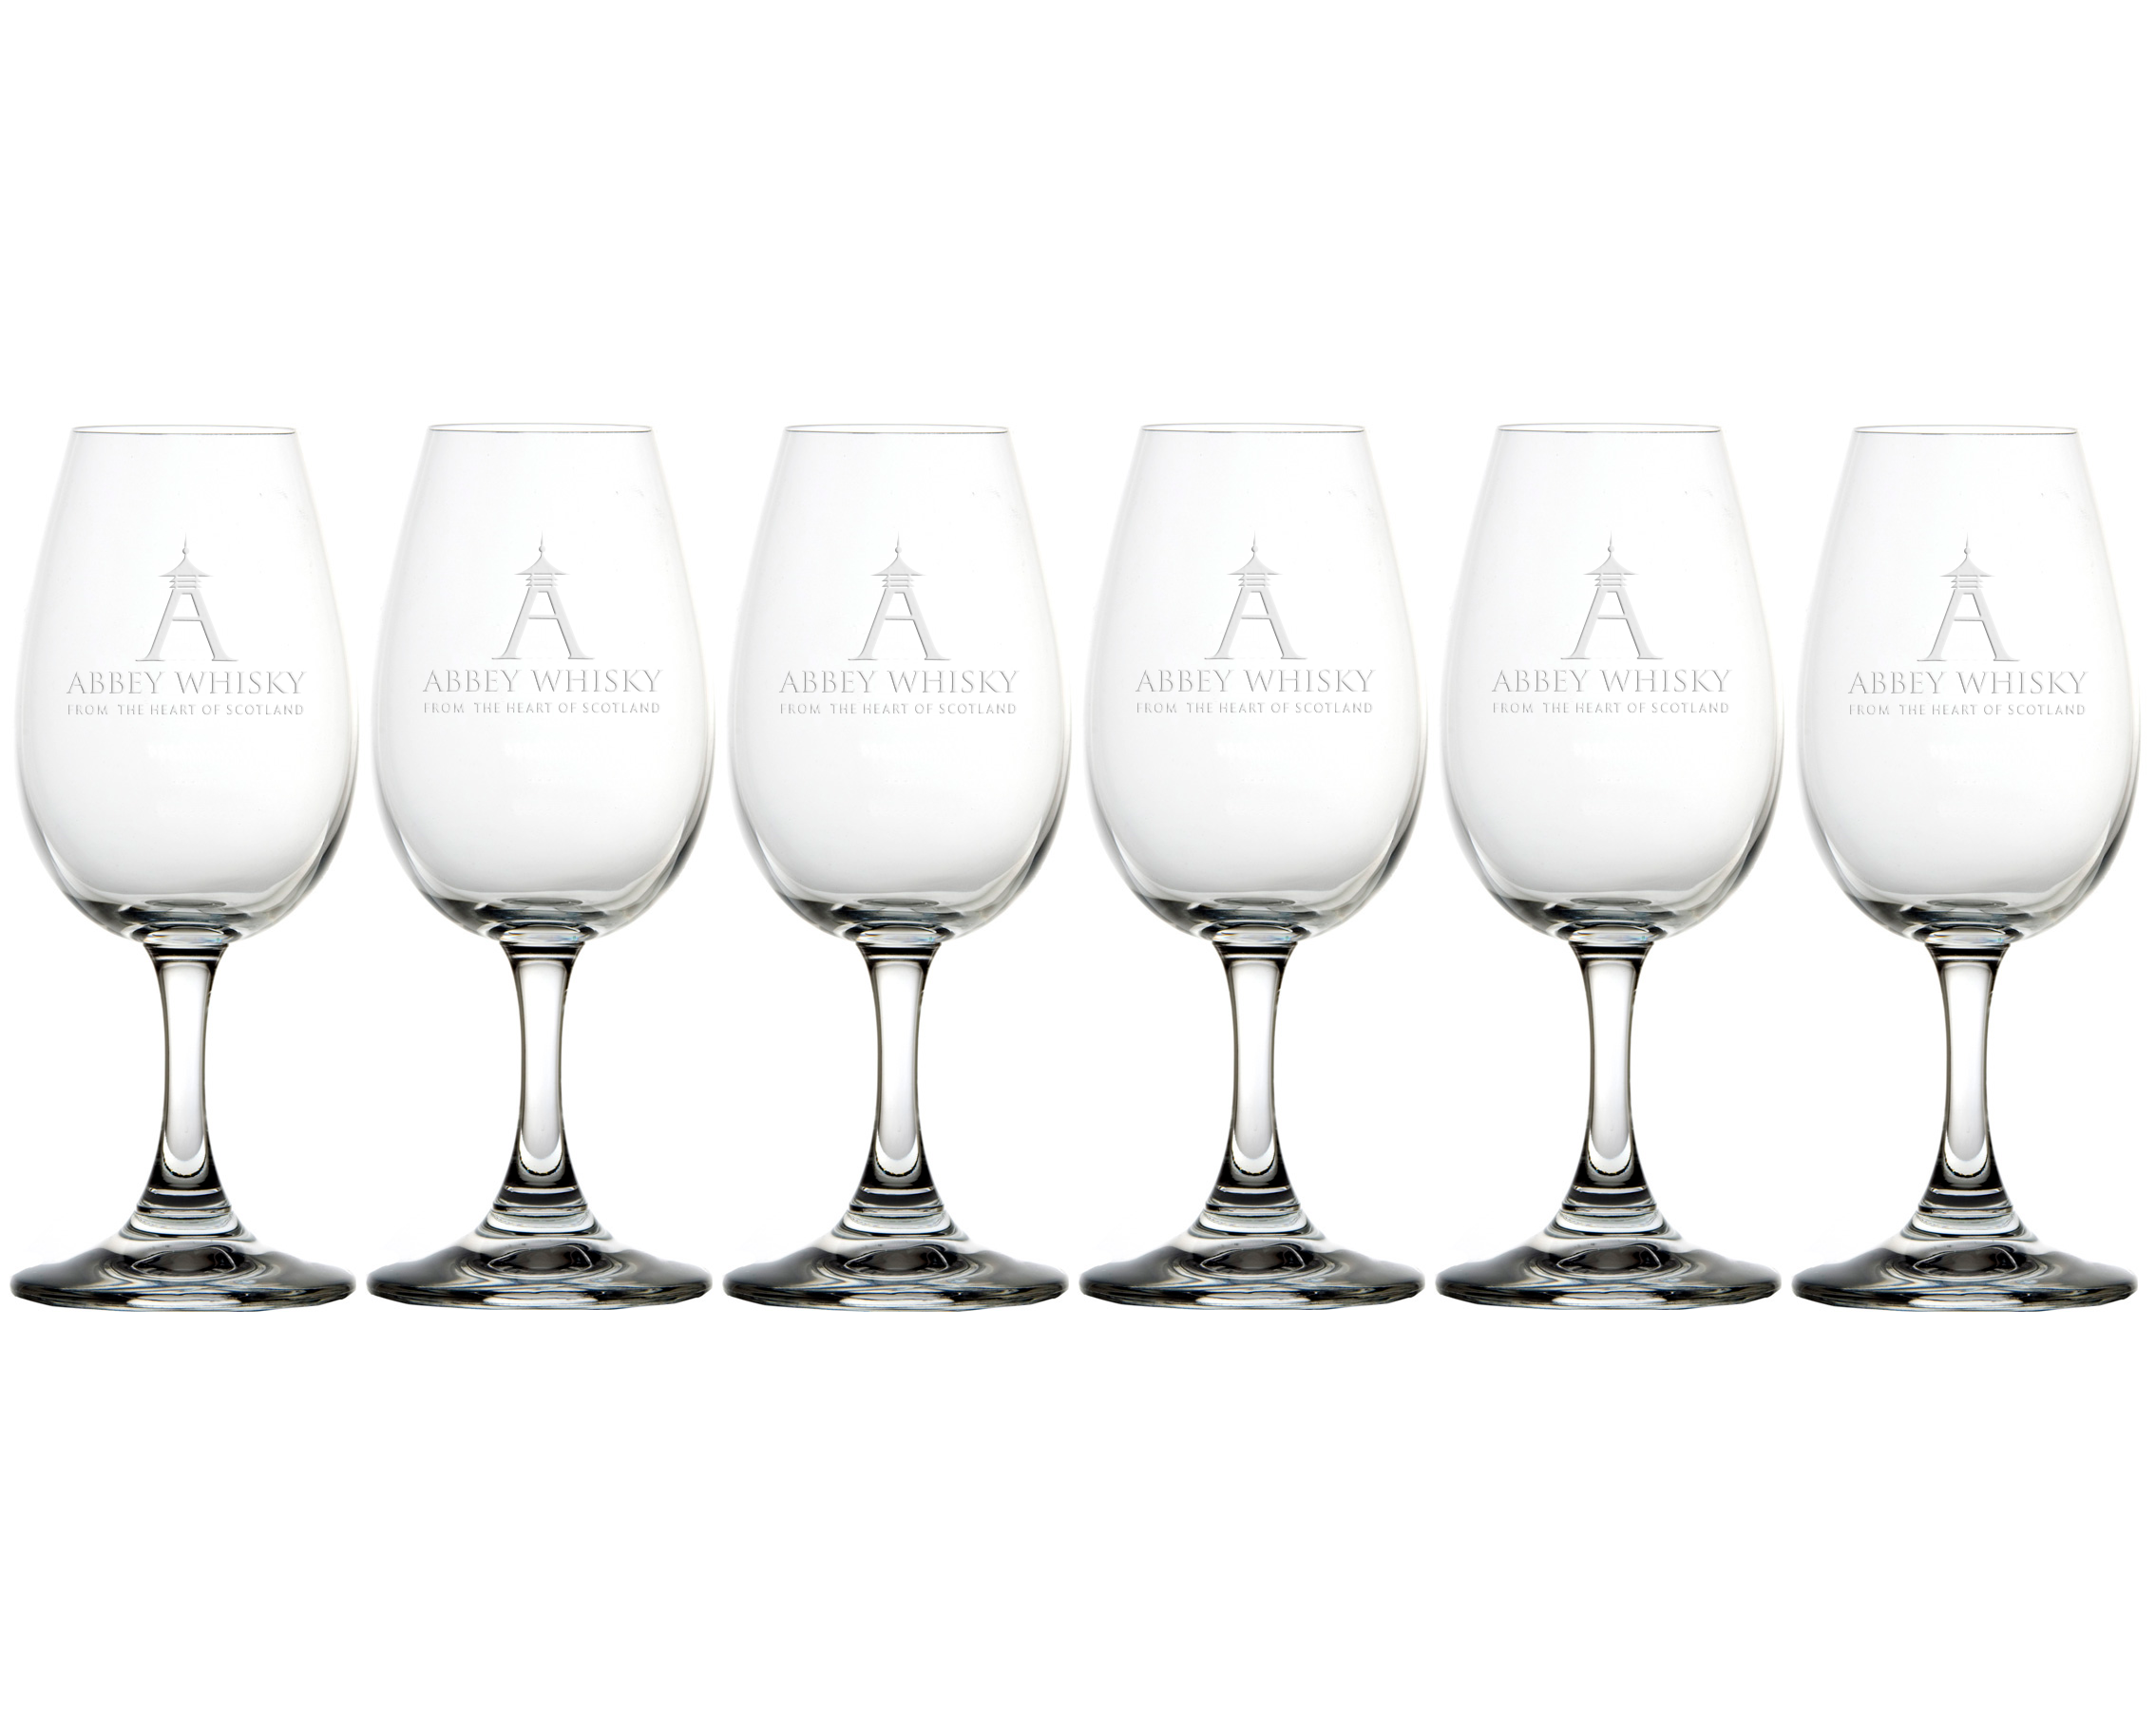 Abbey Whisky Copita Tasting Glass - Set of Six